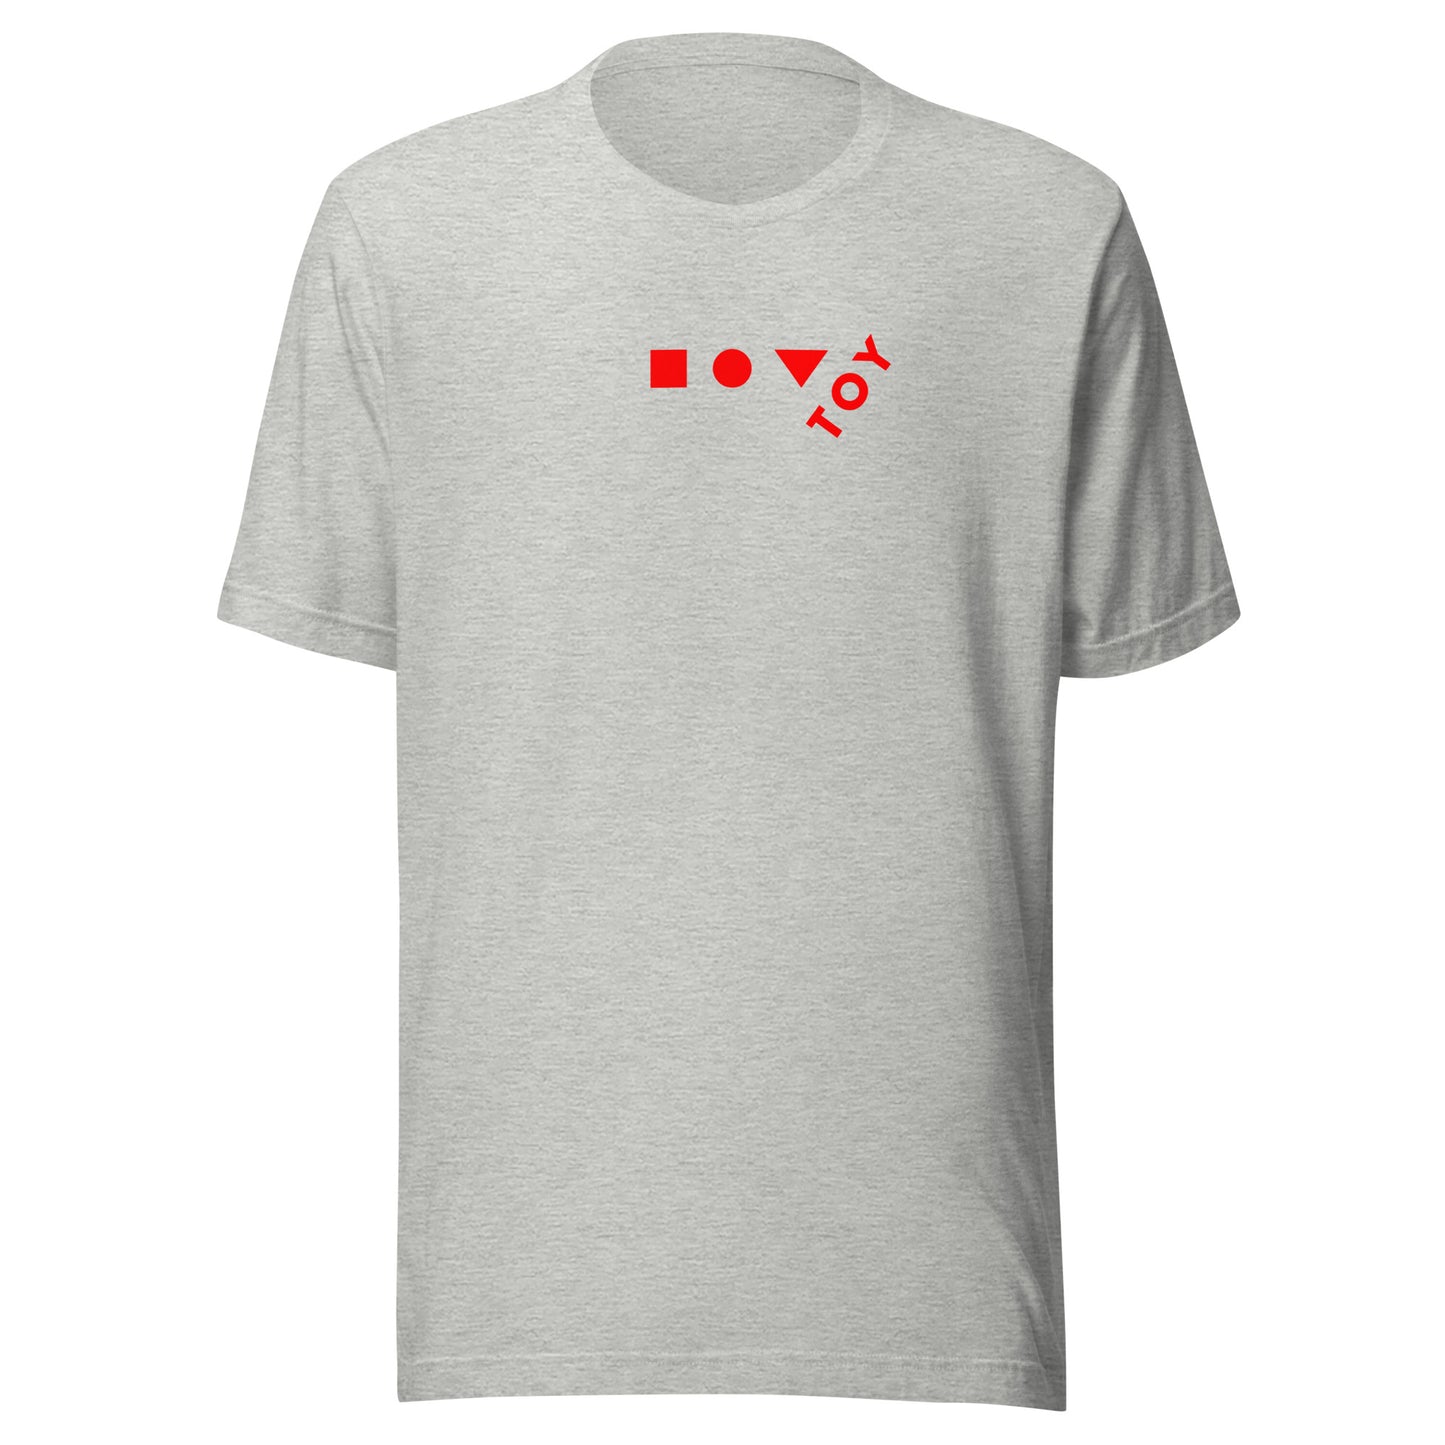 TOY [BLOCK] Series (R) Unisex t-shirt